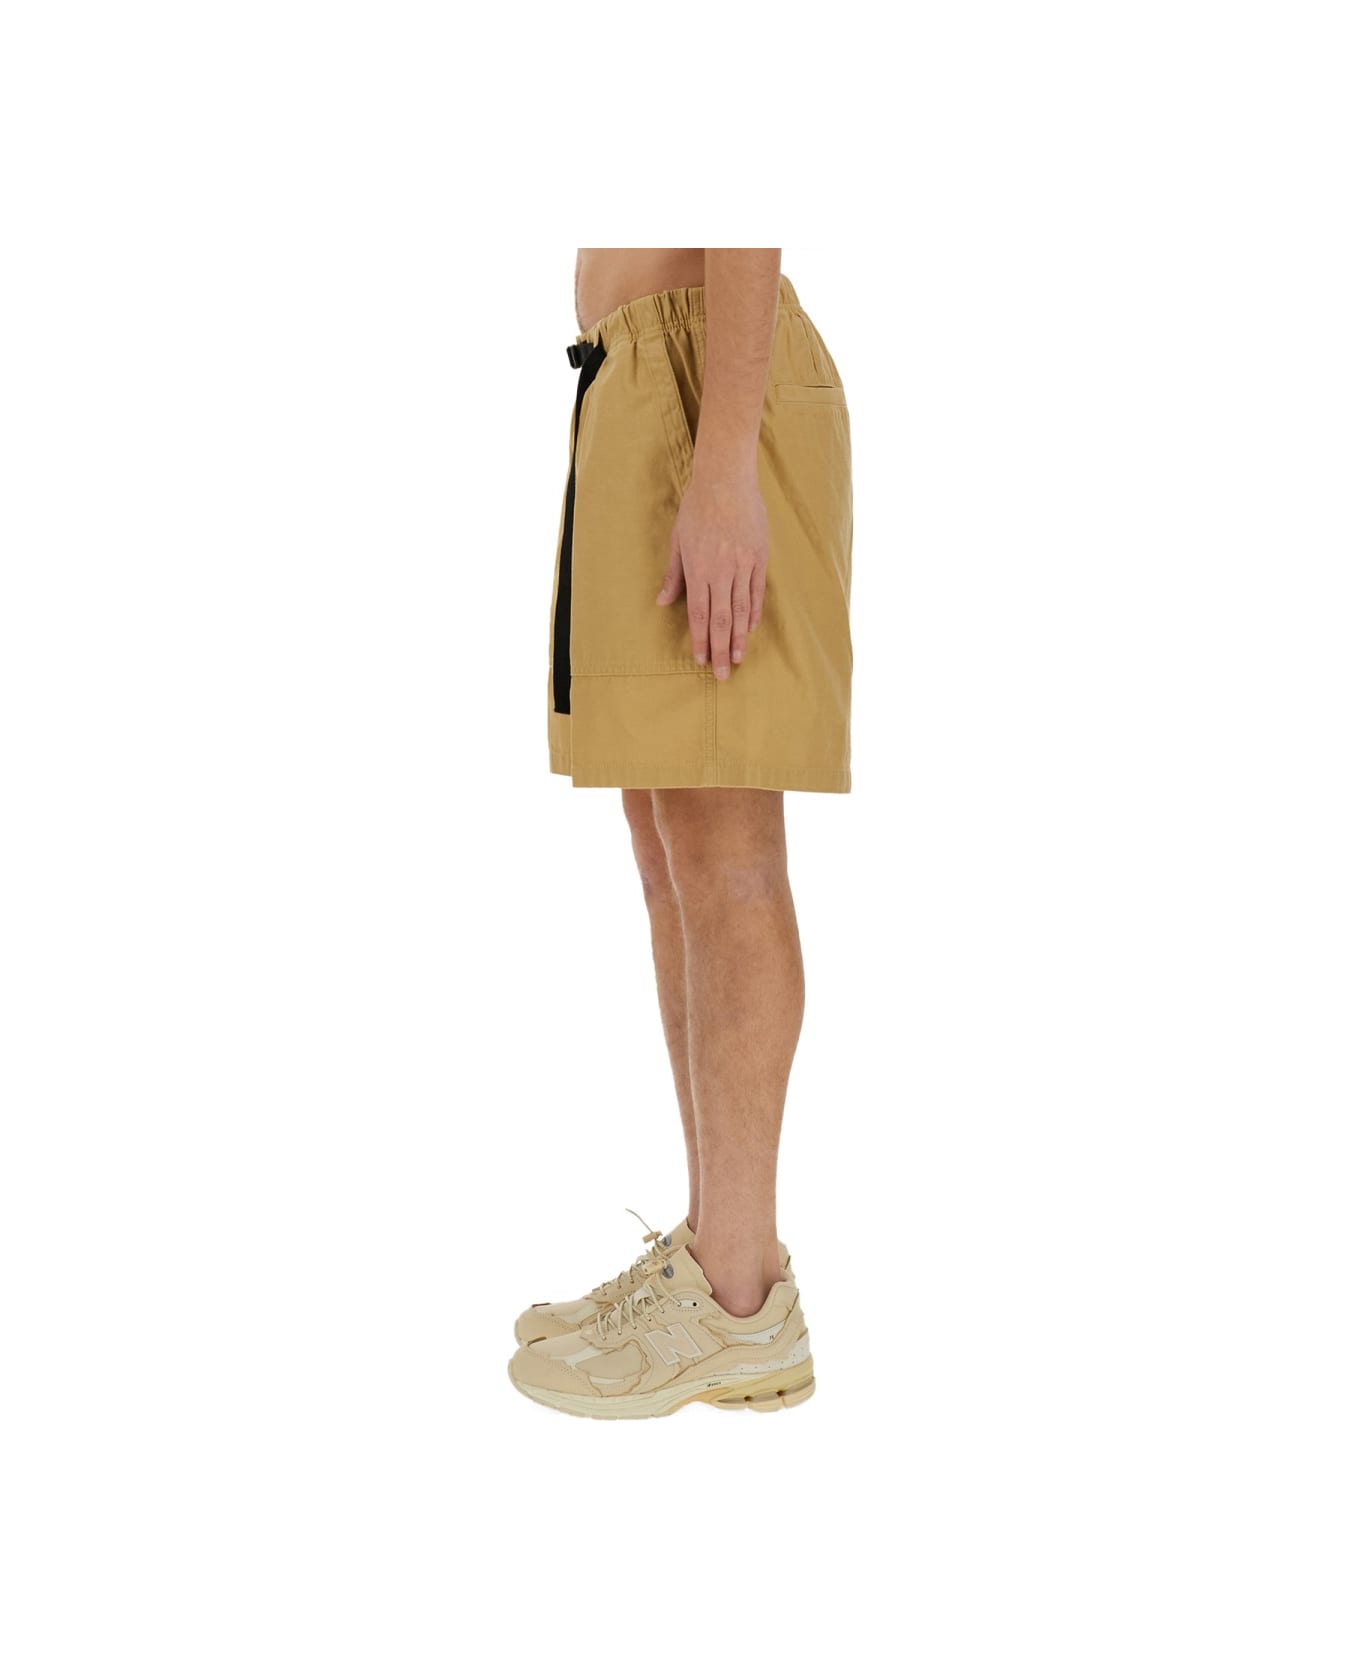 Carhartt Cotton Bermuda Shorts - MULTICOLOUR